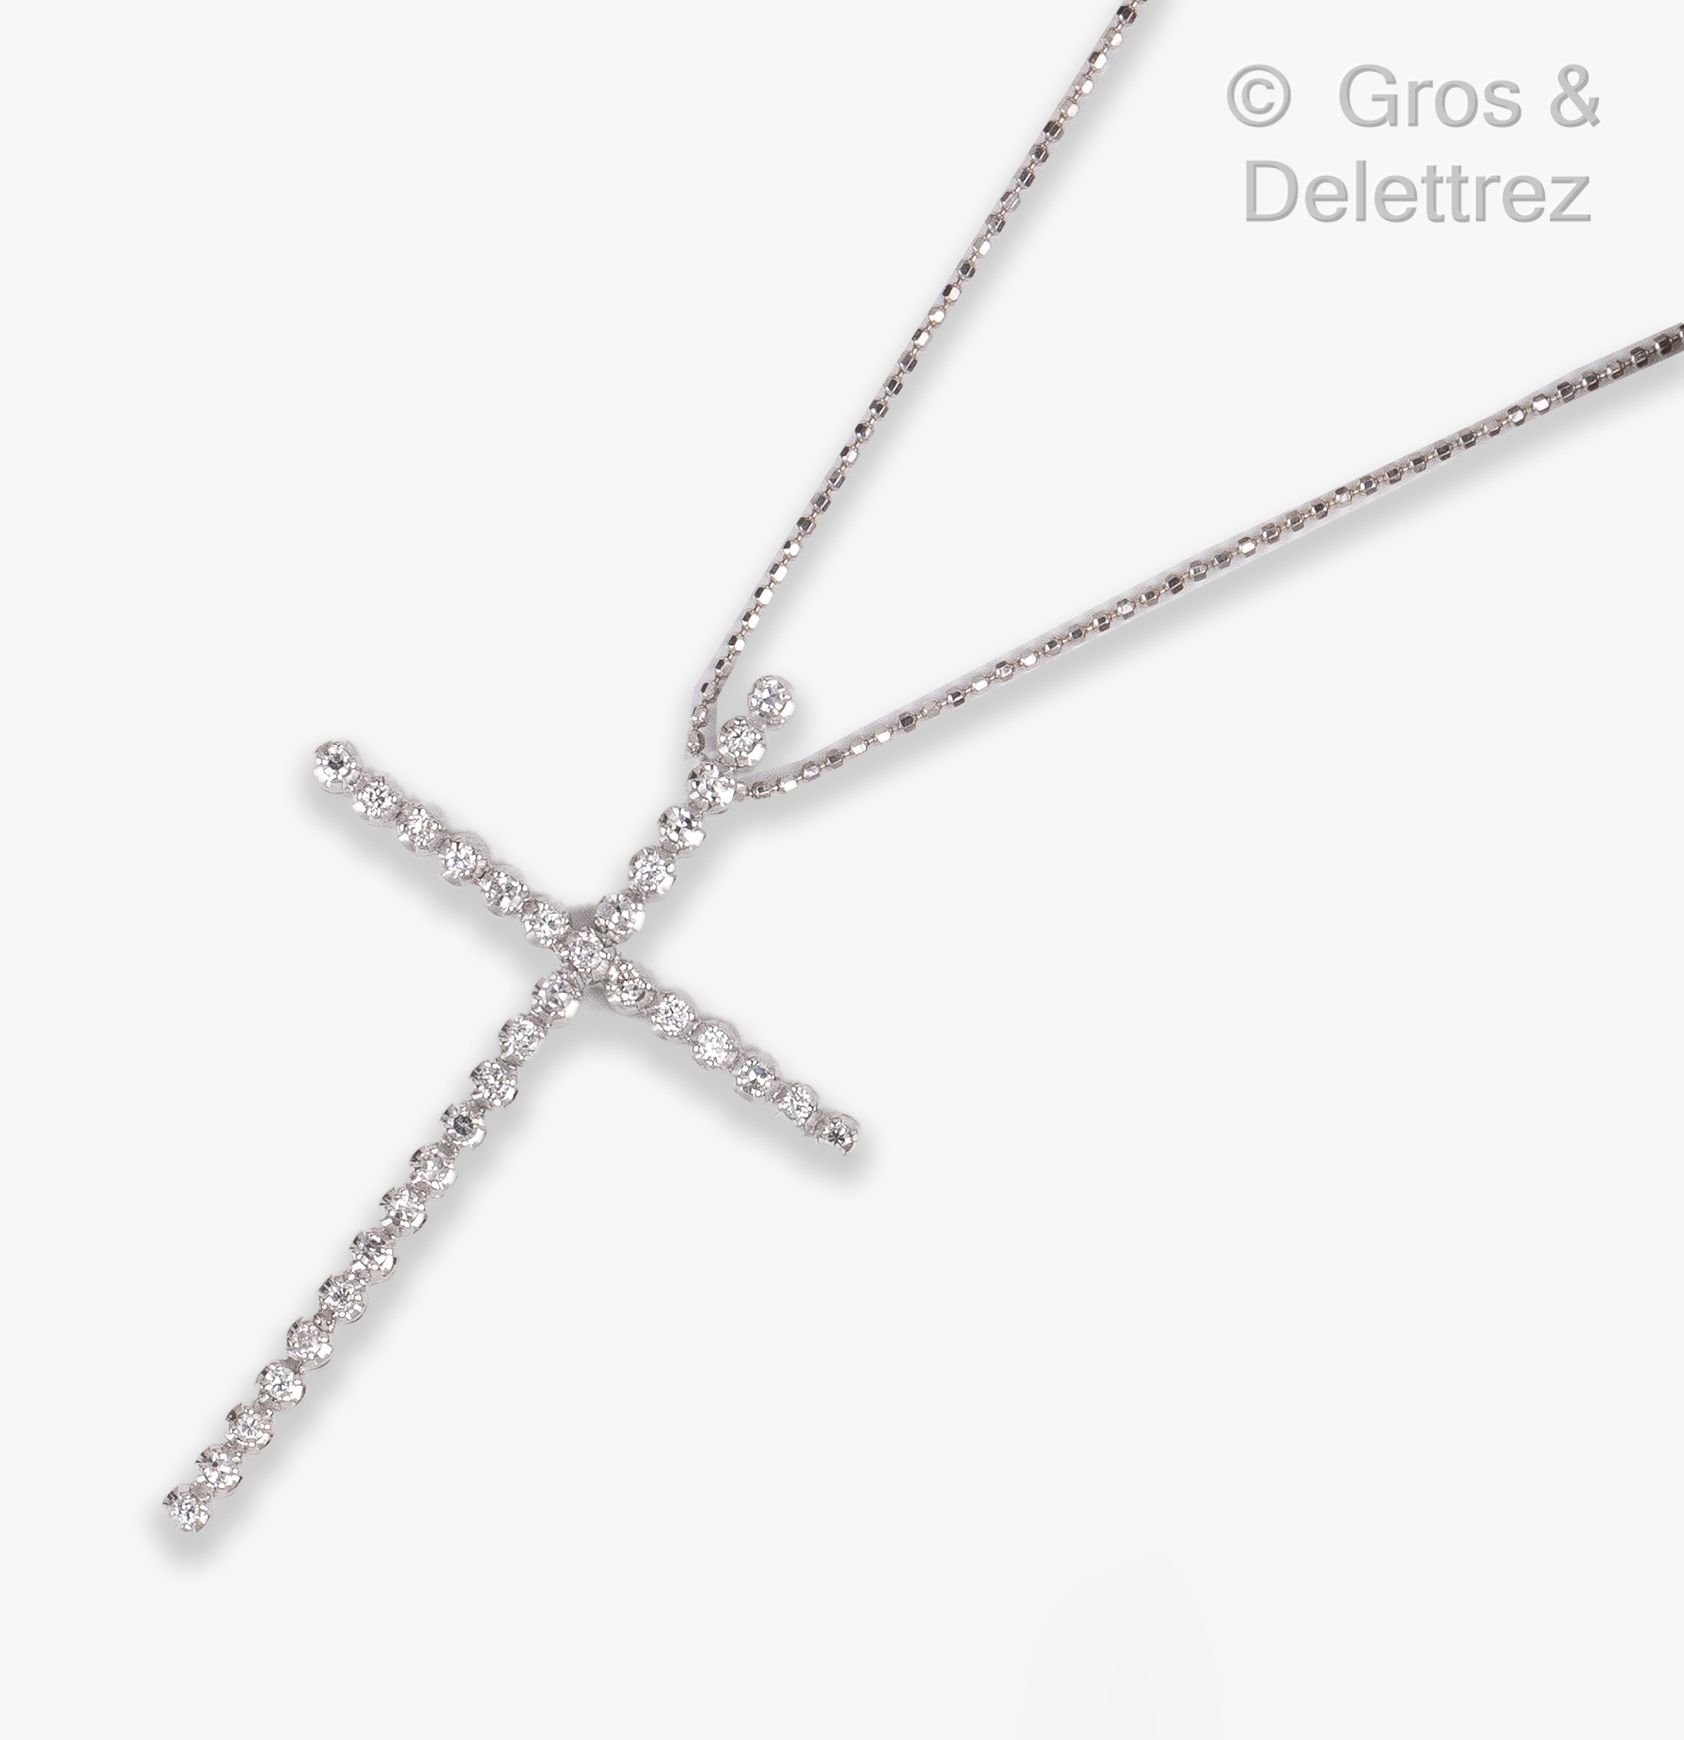 Null 白金 "十字架 "吊坠，全部镶嵌明亮式切割钻石。尺寸：3.5 x 5.5厘米。它还配有一条白金珍珠链。毛重：8.4克。